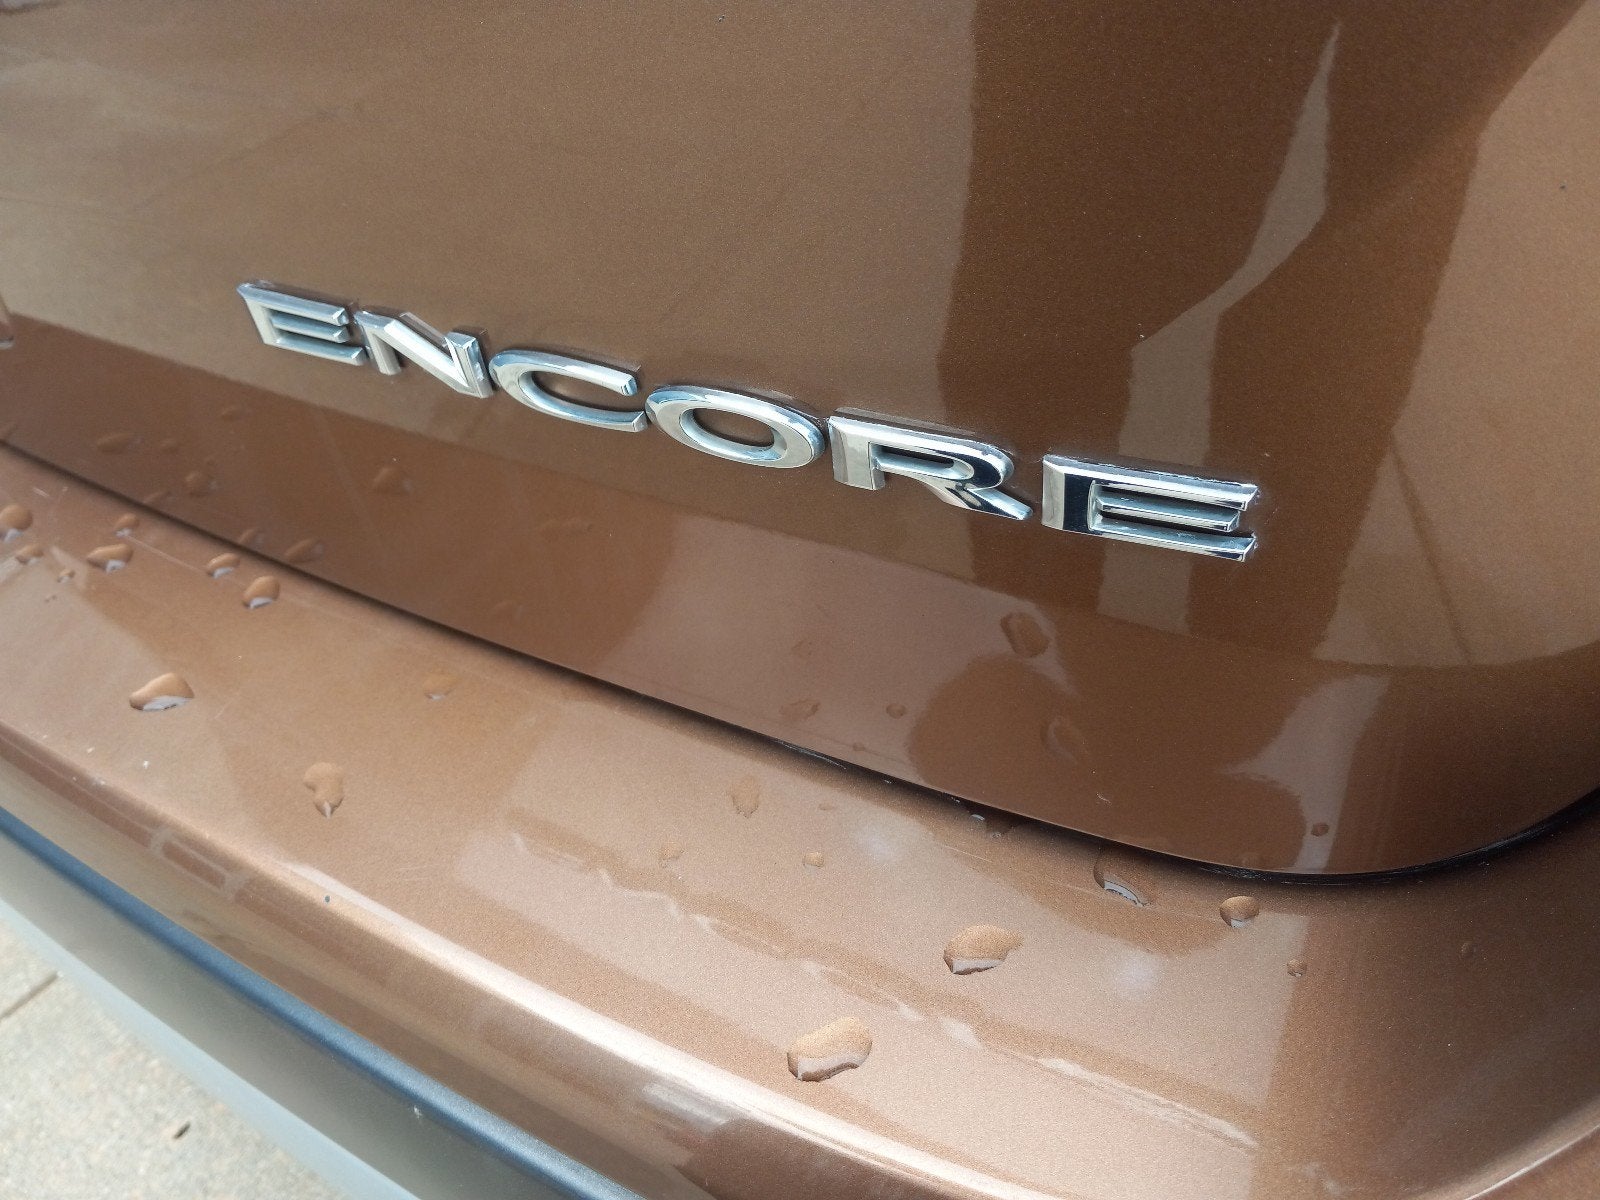 2017 Buick Encore Preferred II